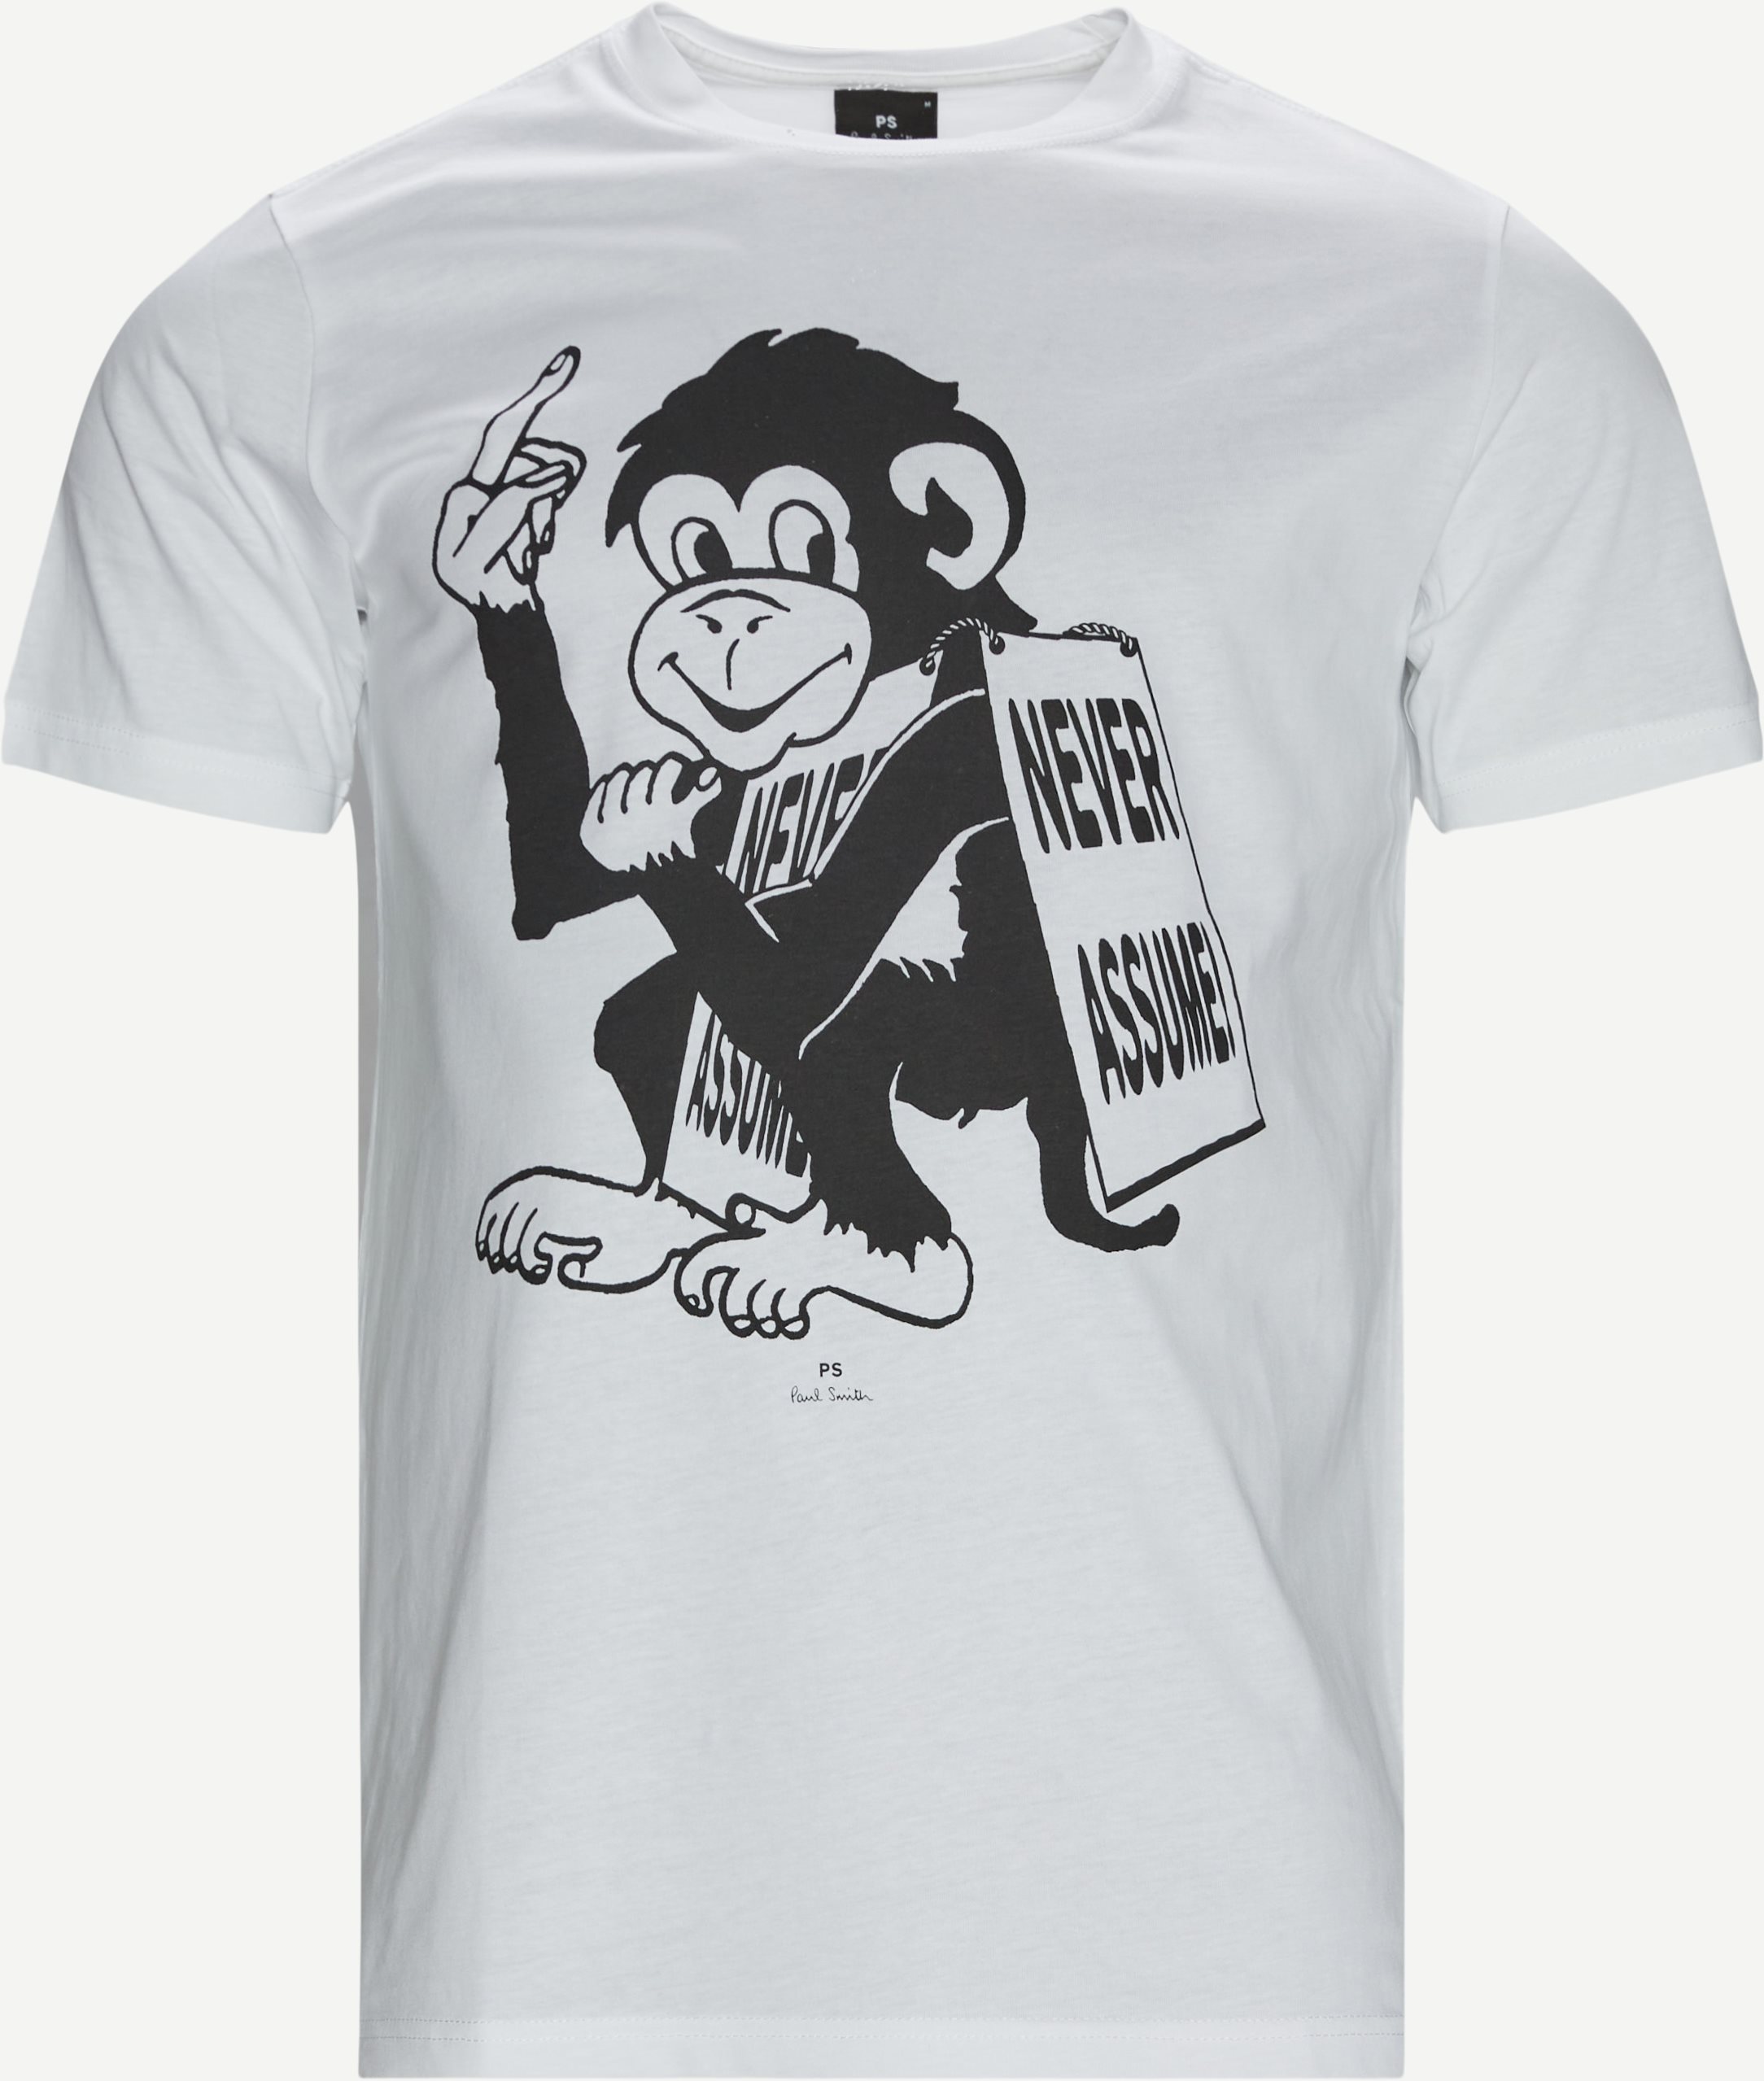 Monkey Tee - T-shirts - Regular fit - White